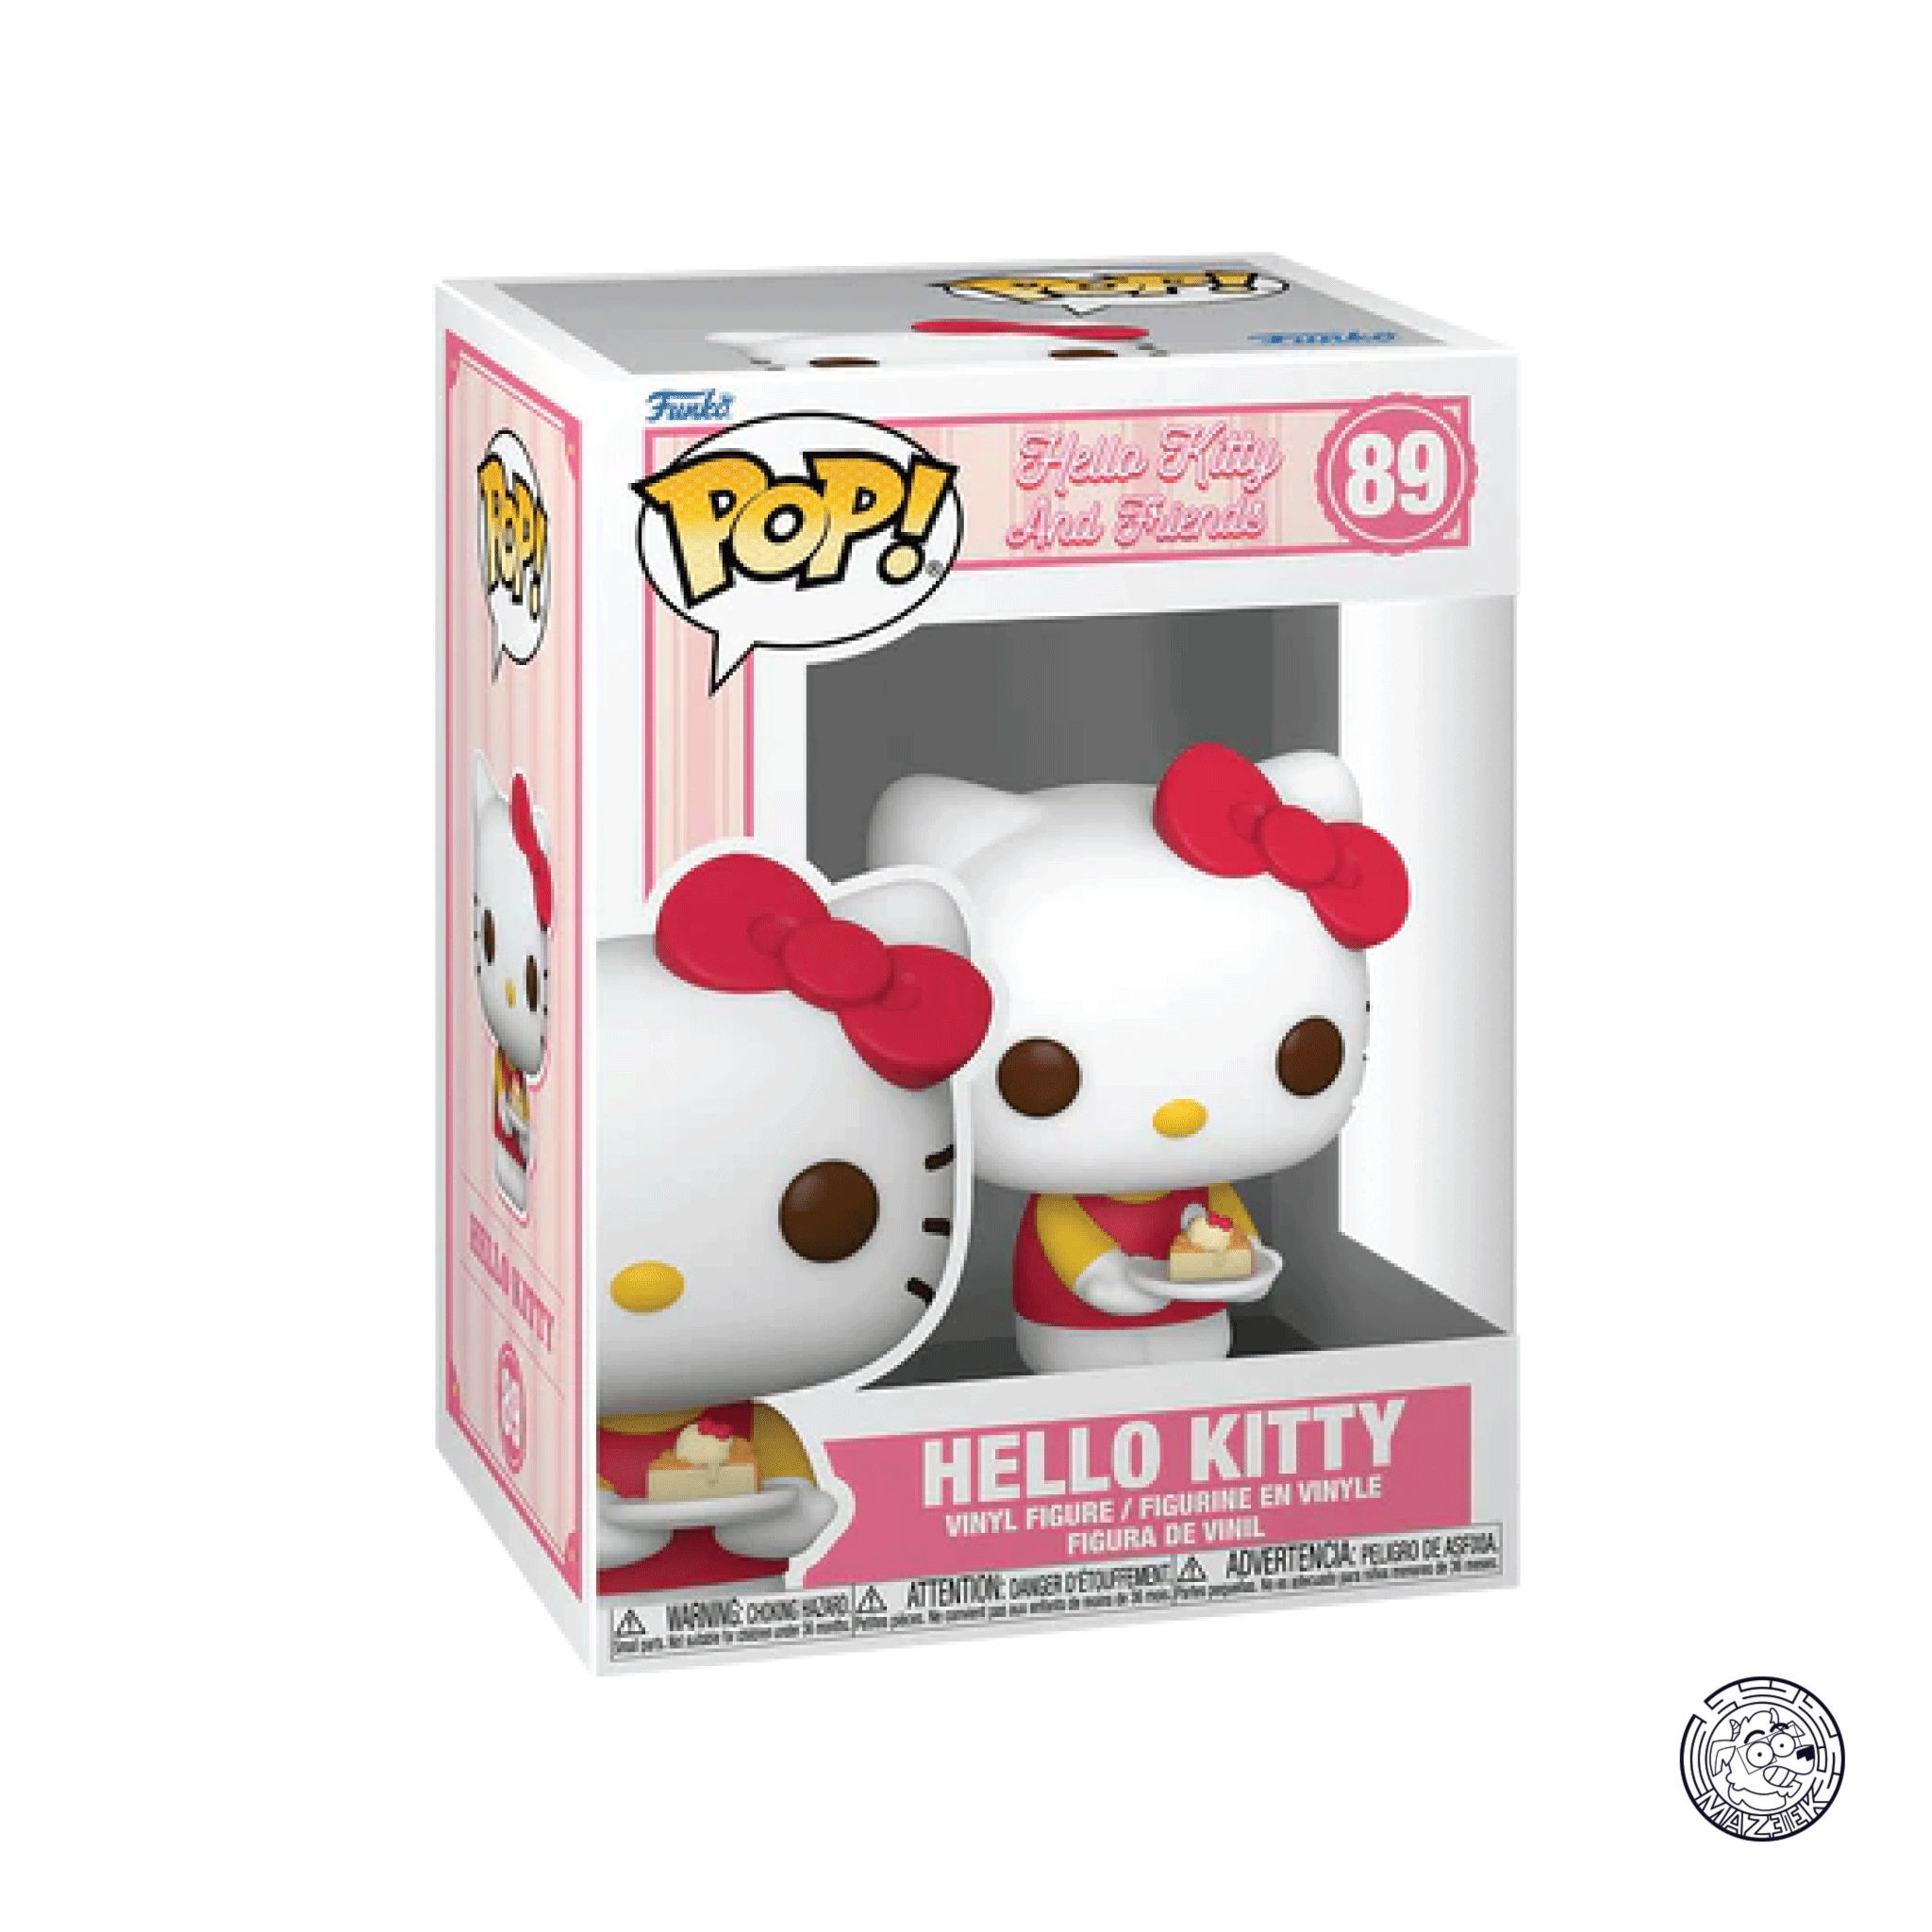 Funko POP! Hello Kitty and Friends: Hello Kitty 89